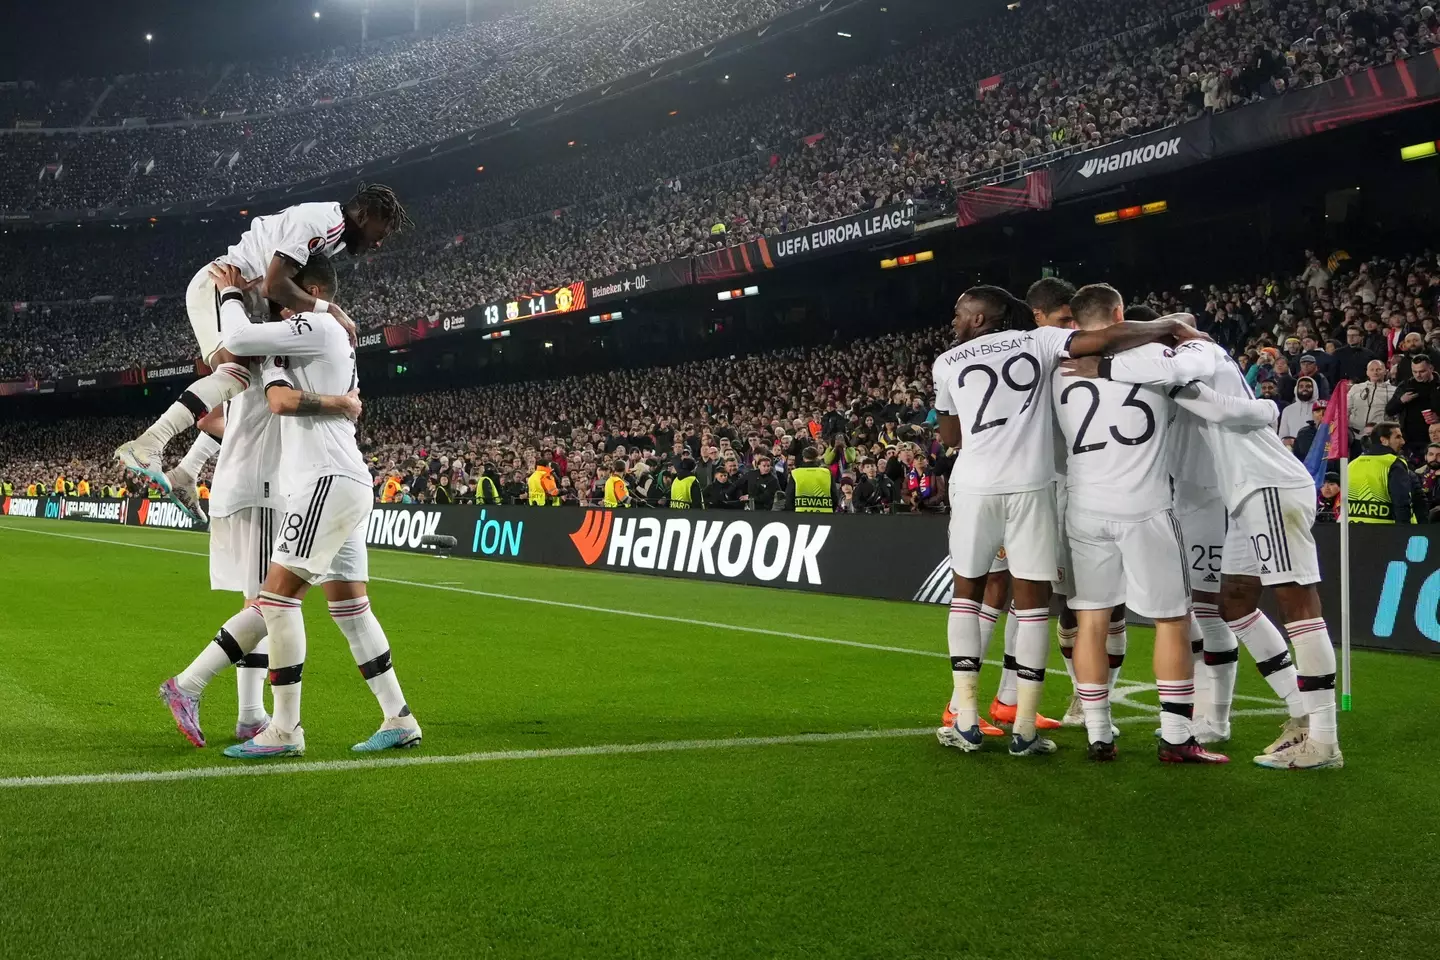 Manchester United players celebrate scoring against Barcelona. Image: Alamy 